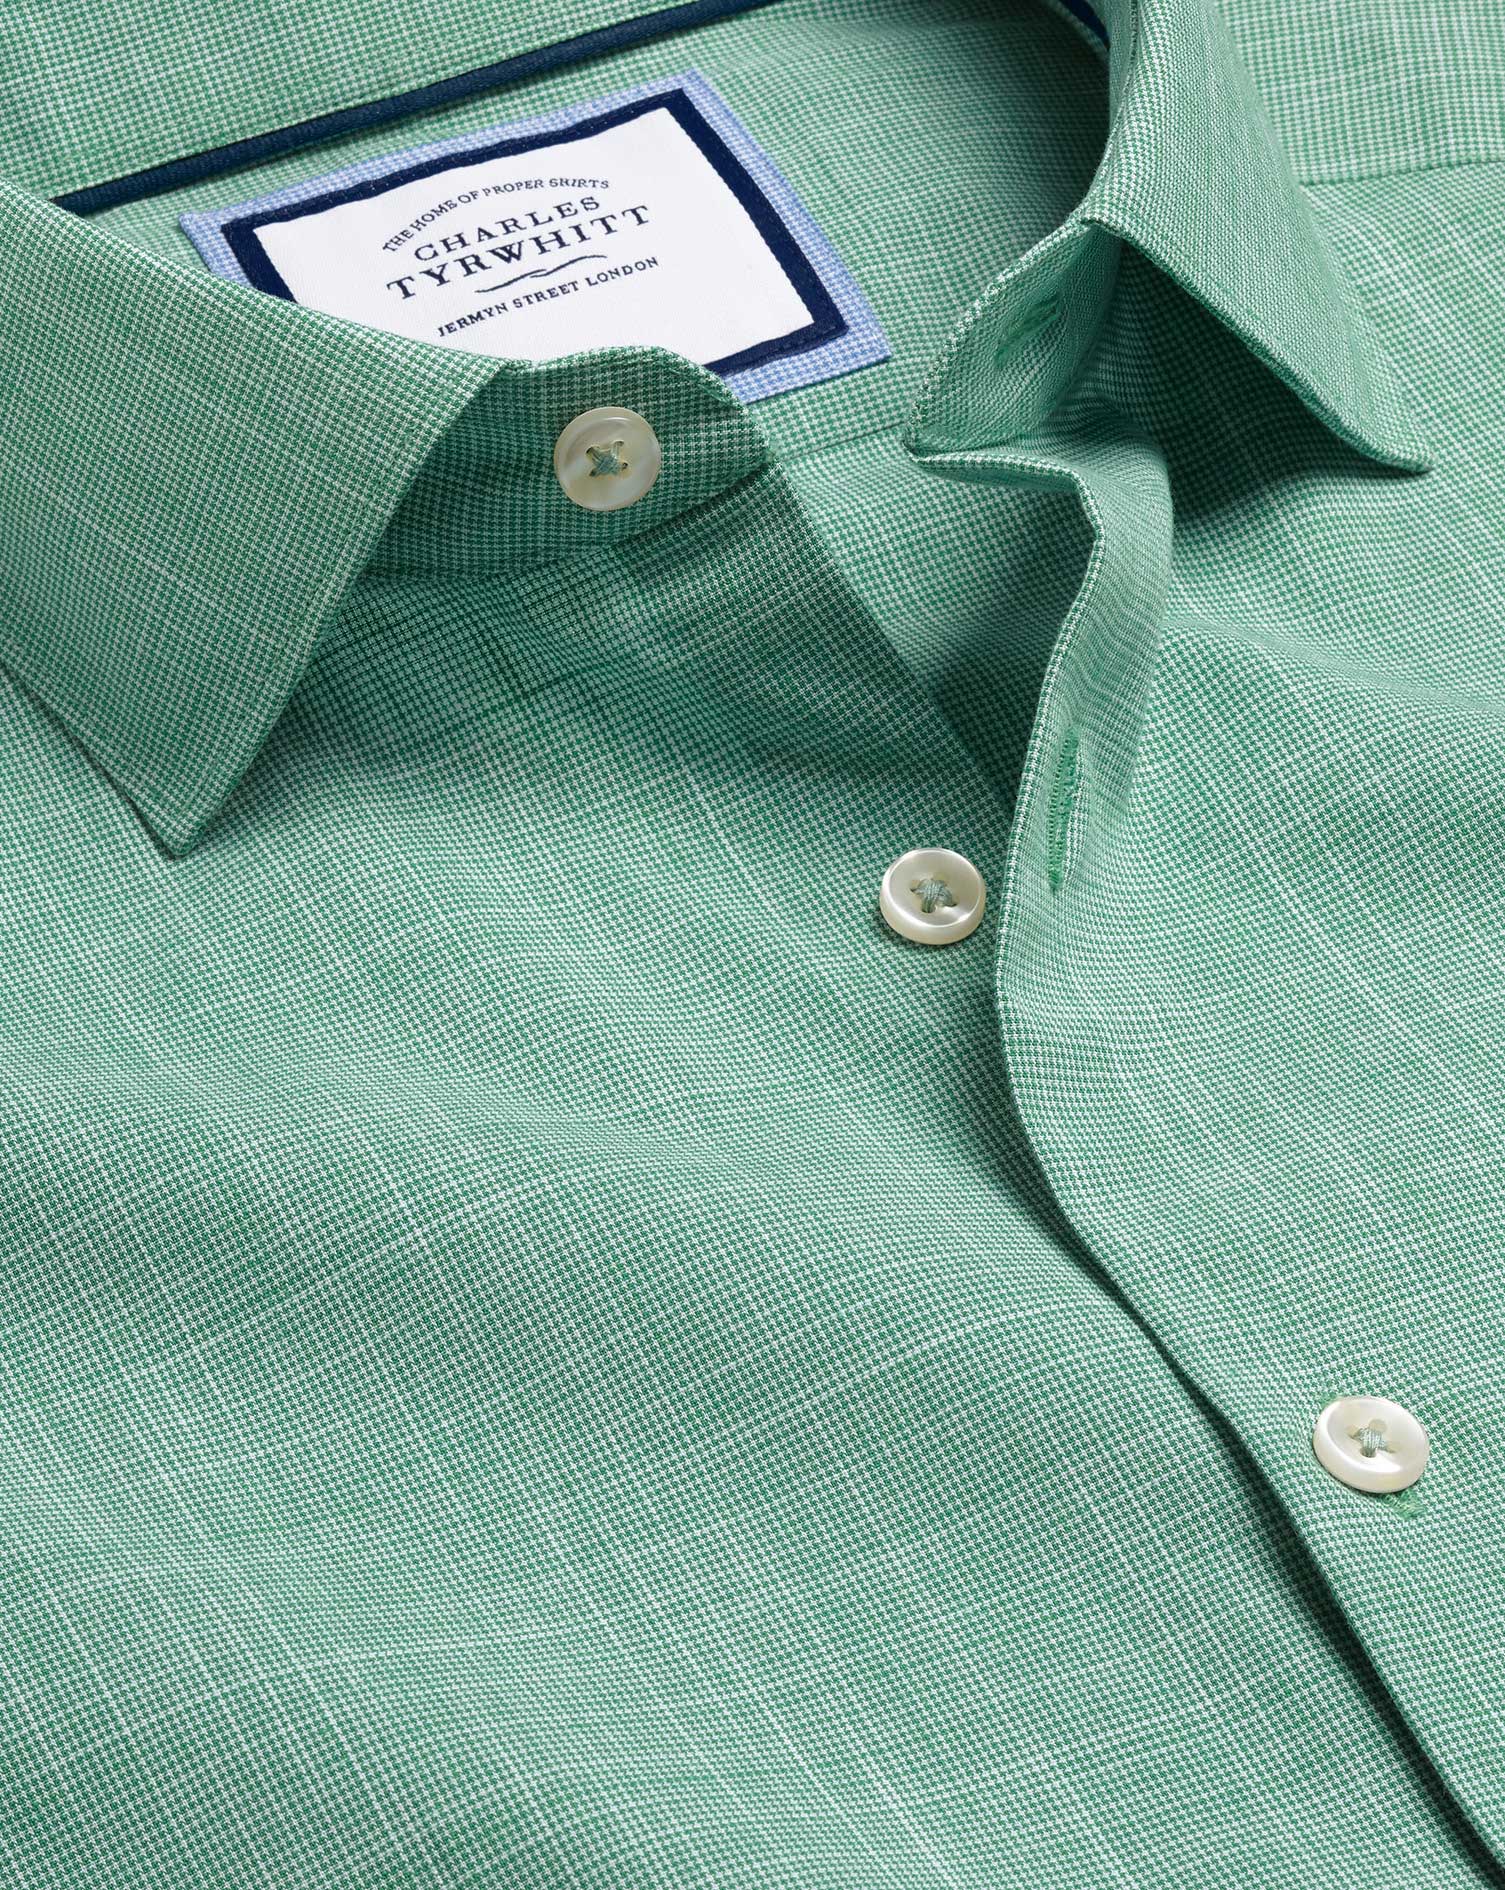 Business Casual Collar Cotton Slub Dress Shirt - Green Single Cuff Size 17/35